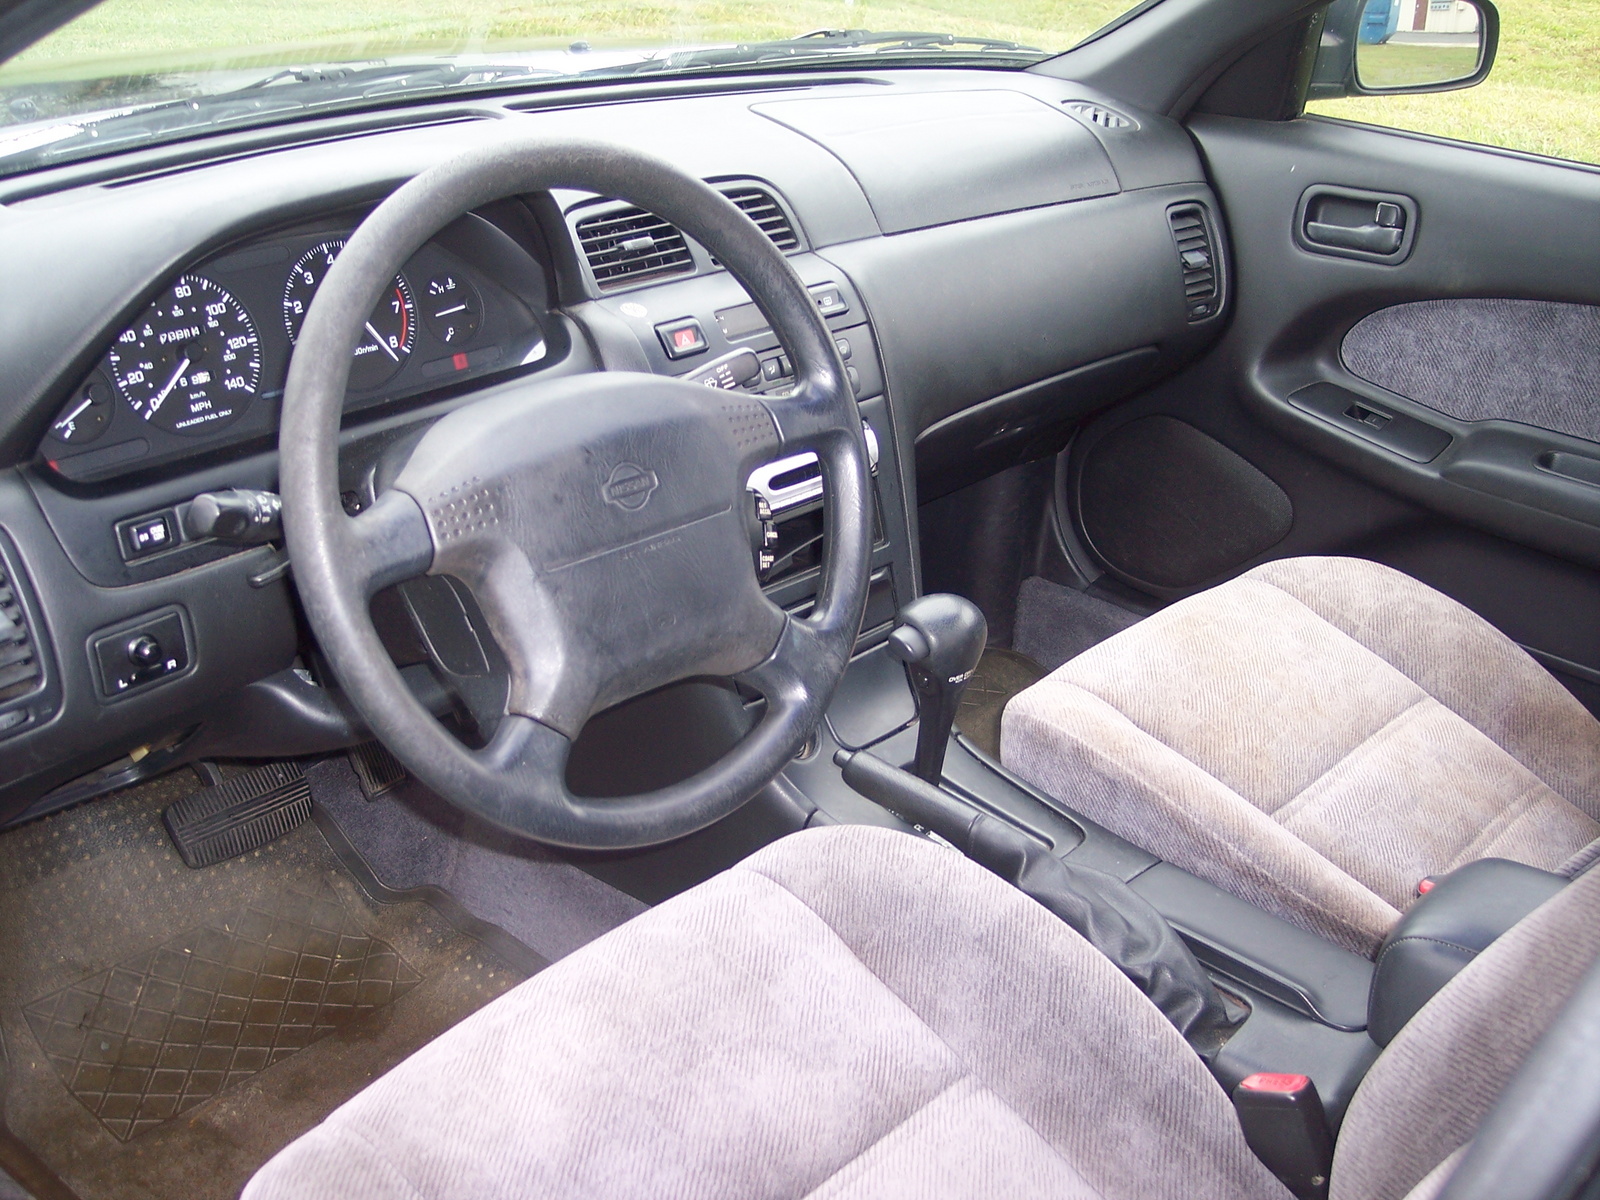 1997 Nissan maxima gle interior #5